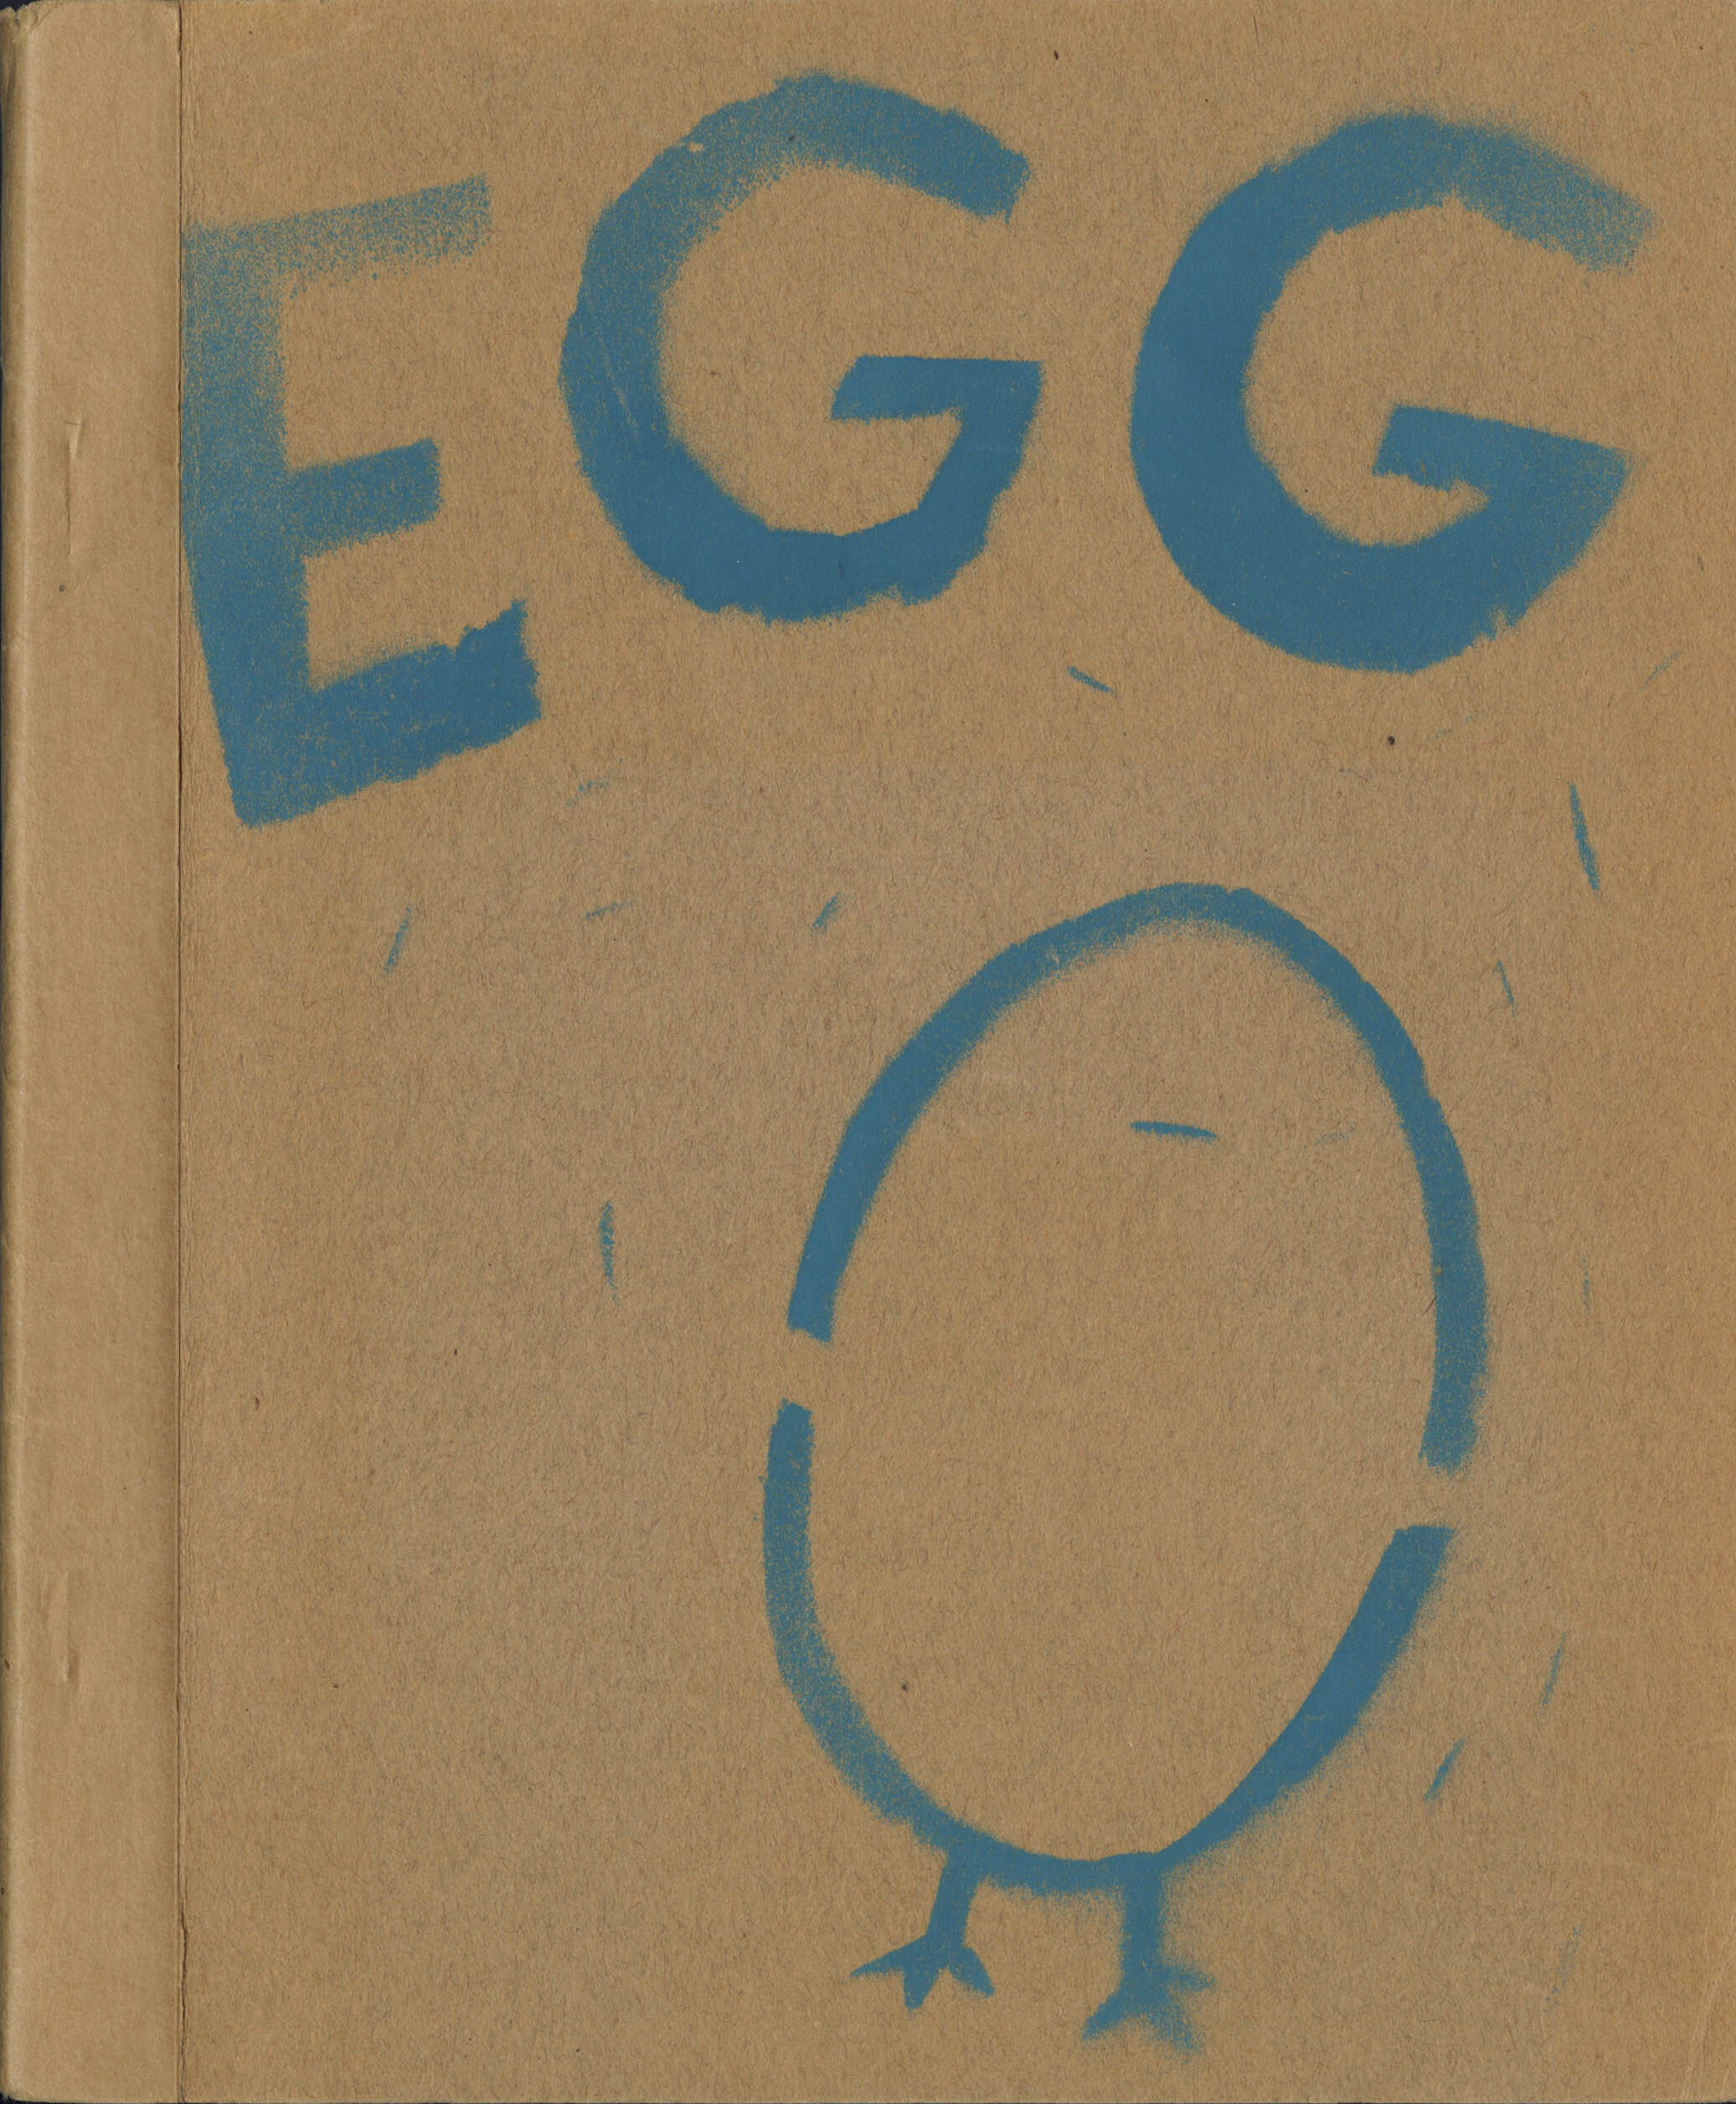 THE EGG 1959